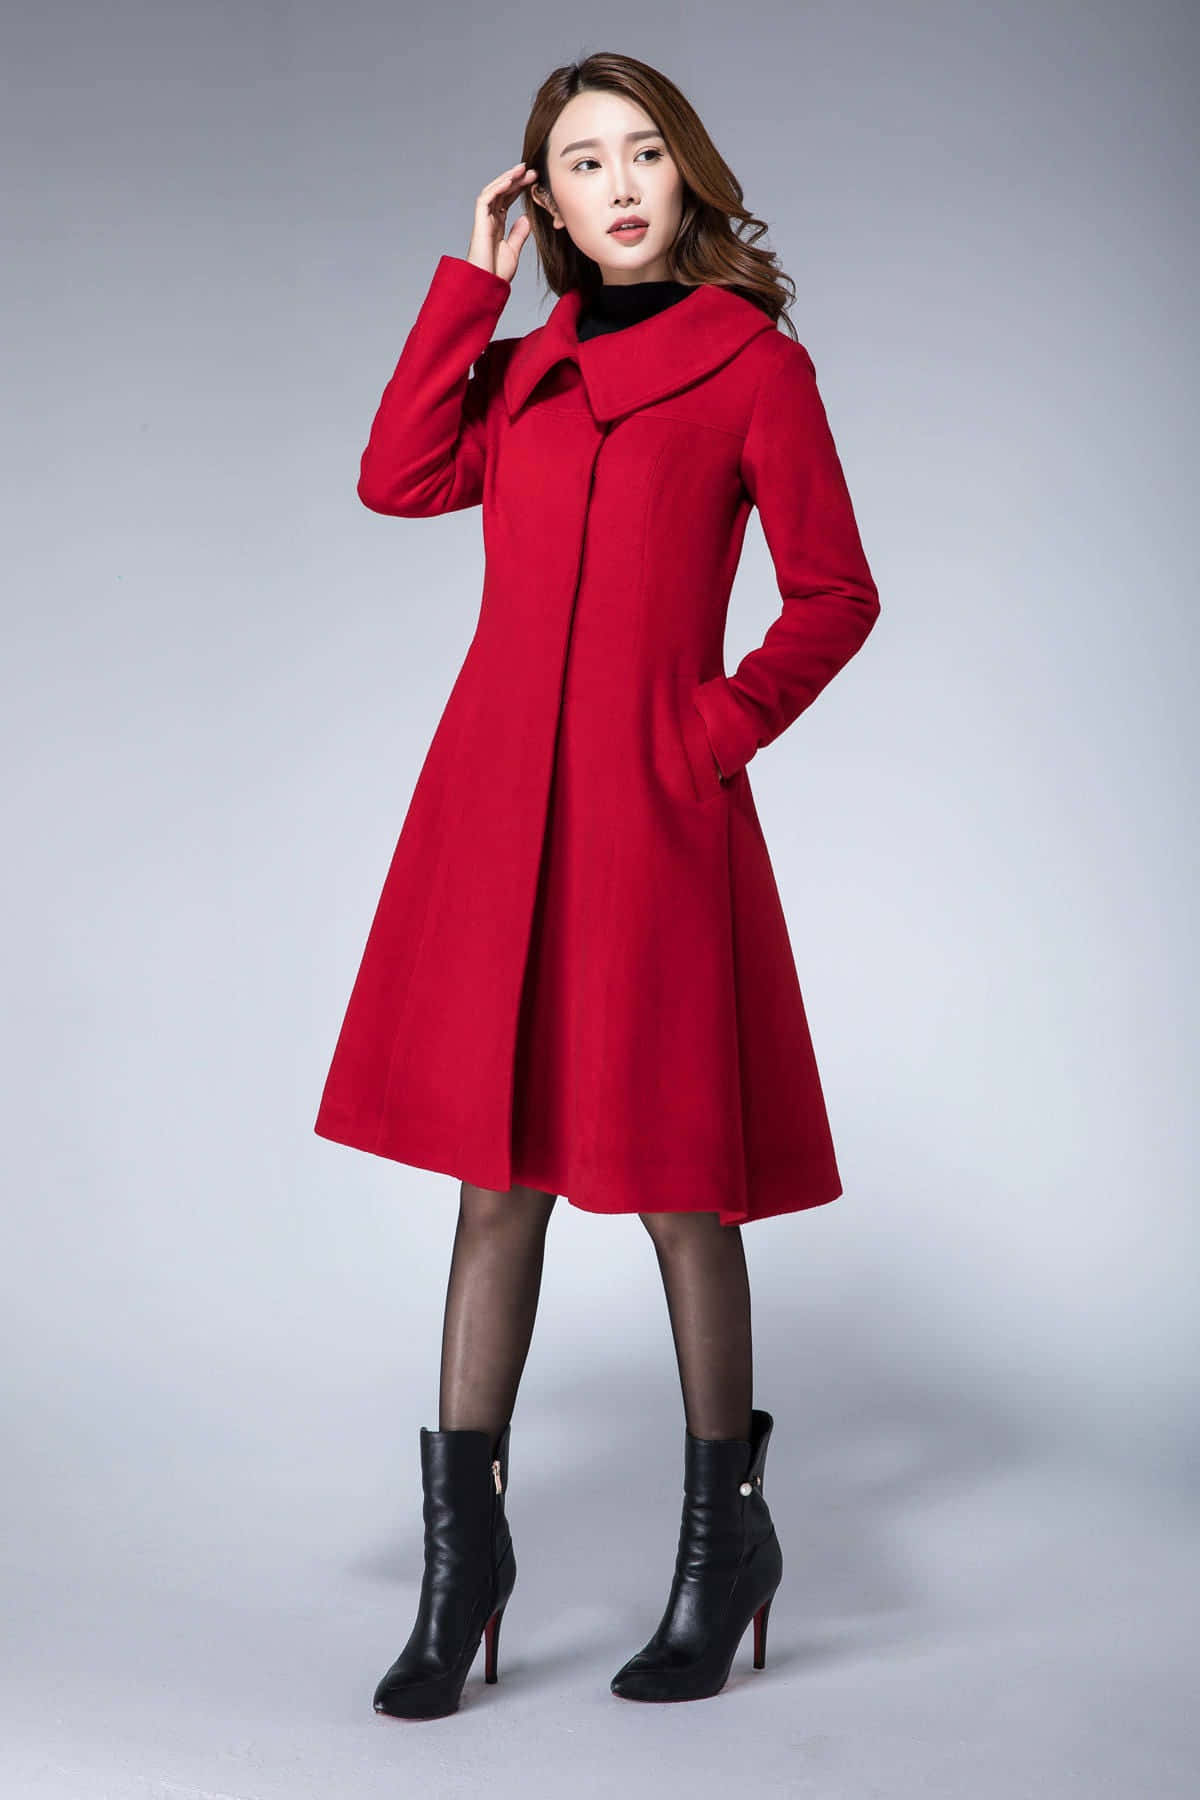 Elegant Woman in a Stylish Red Coat Wallpaper